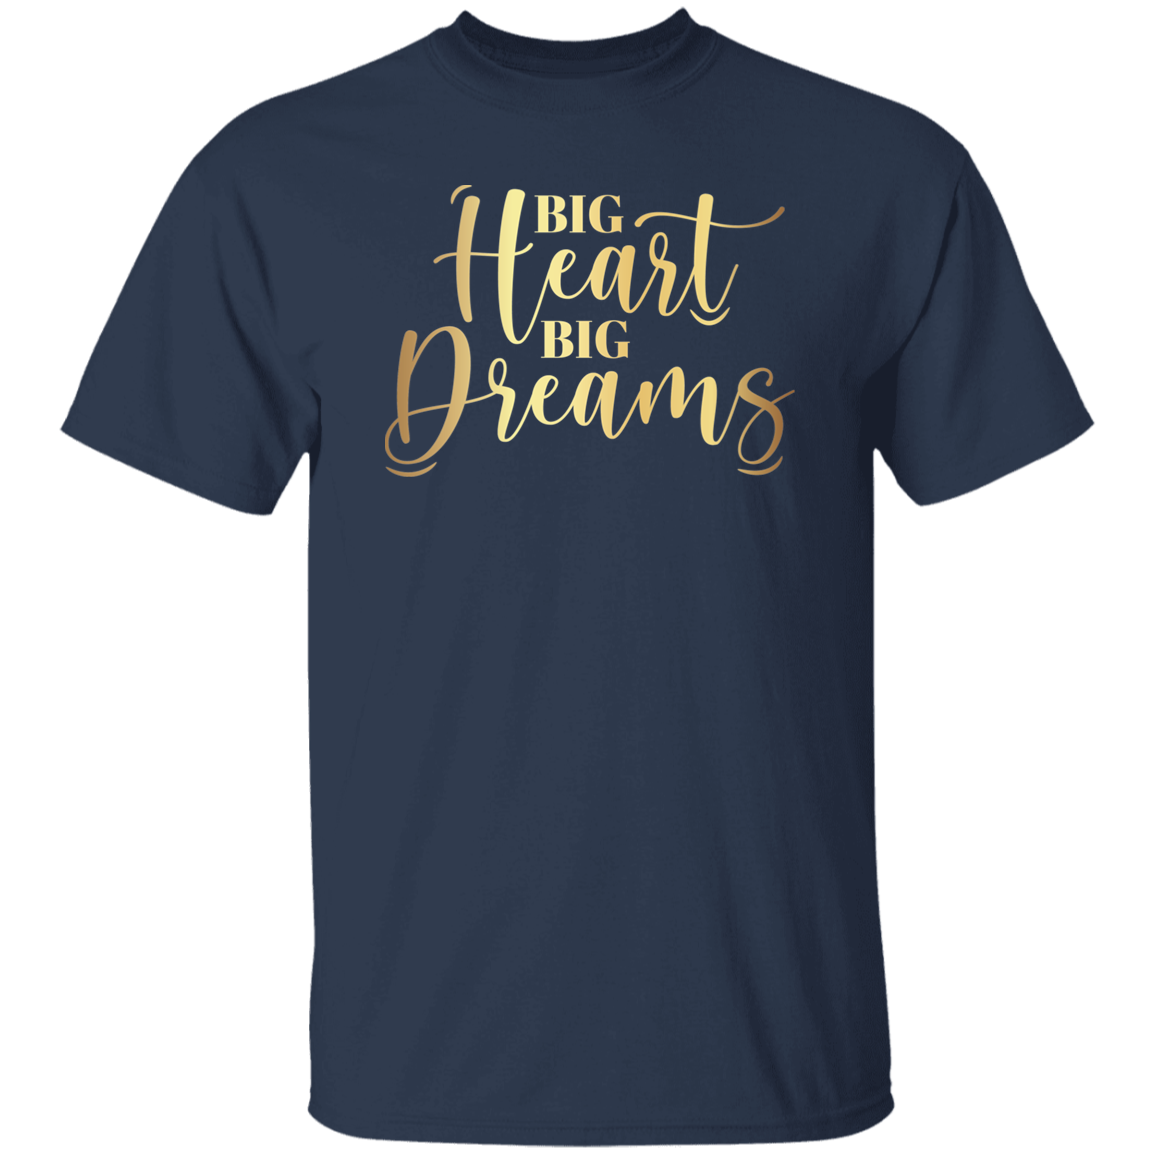 Dreams T-Shirt